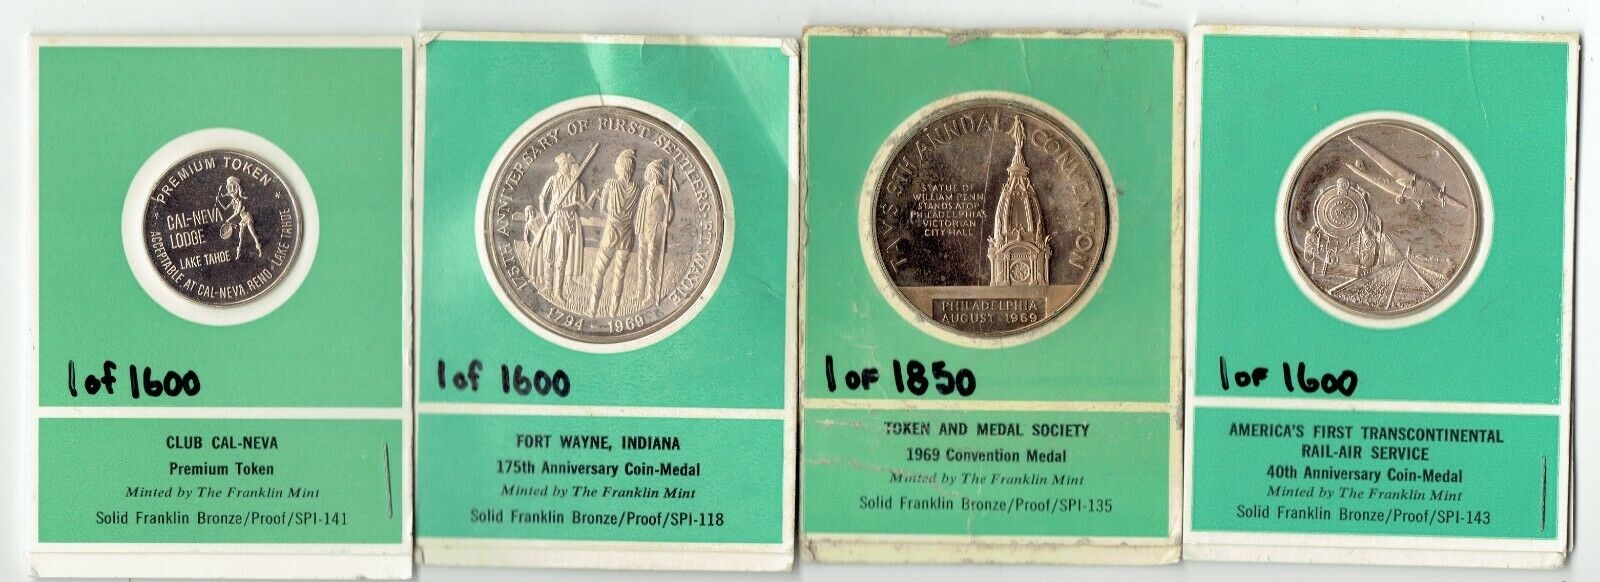 4 Different Franklin Mint Proof Medals.jpg